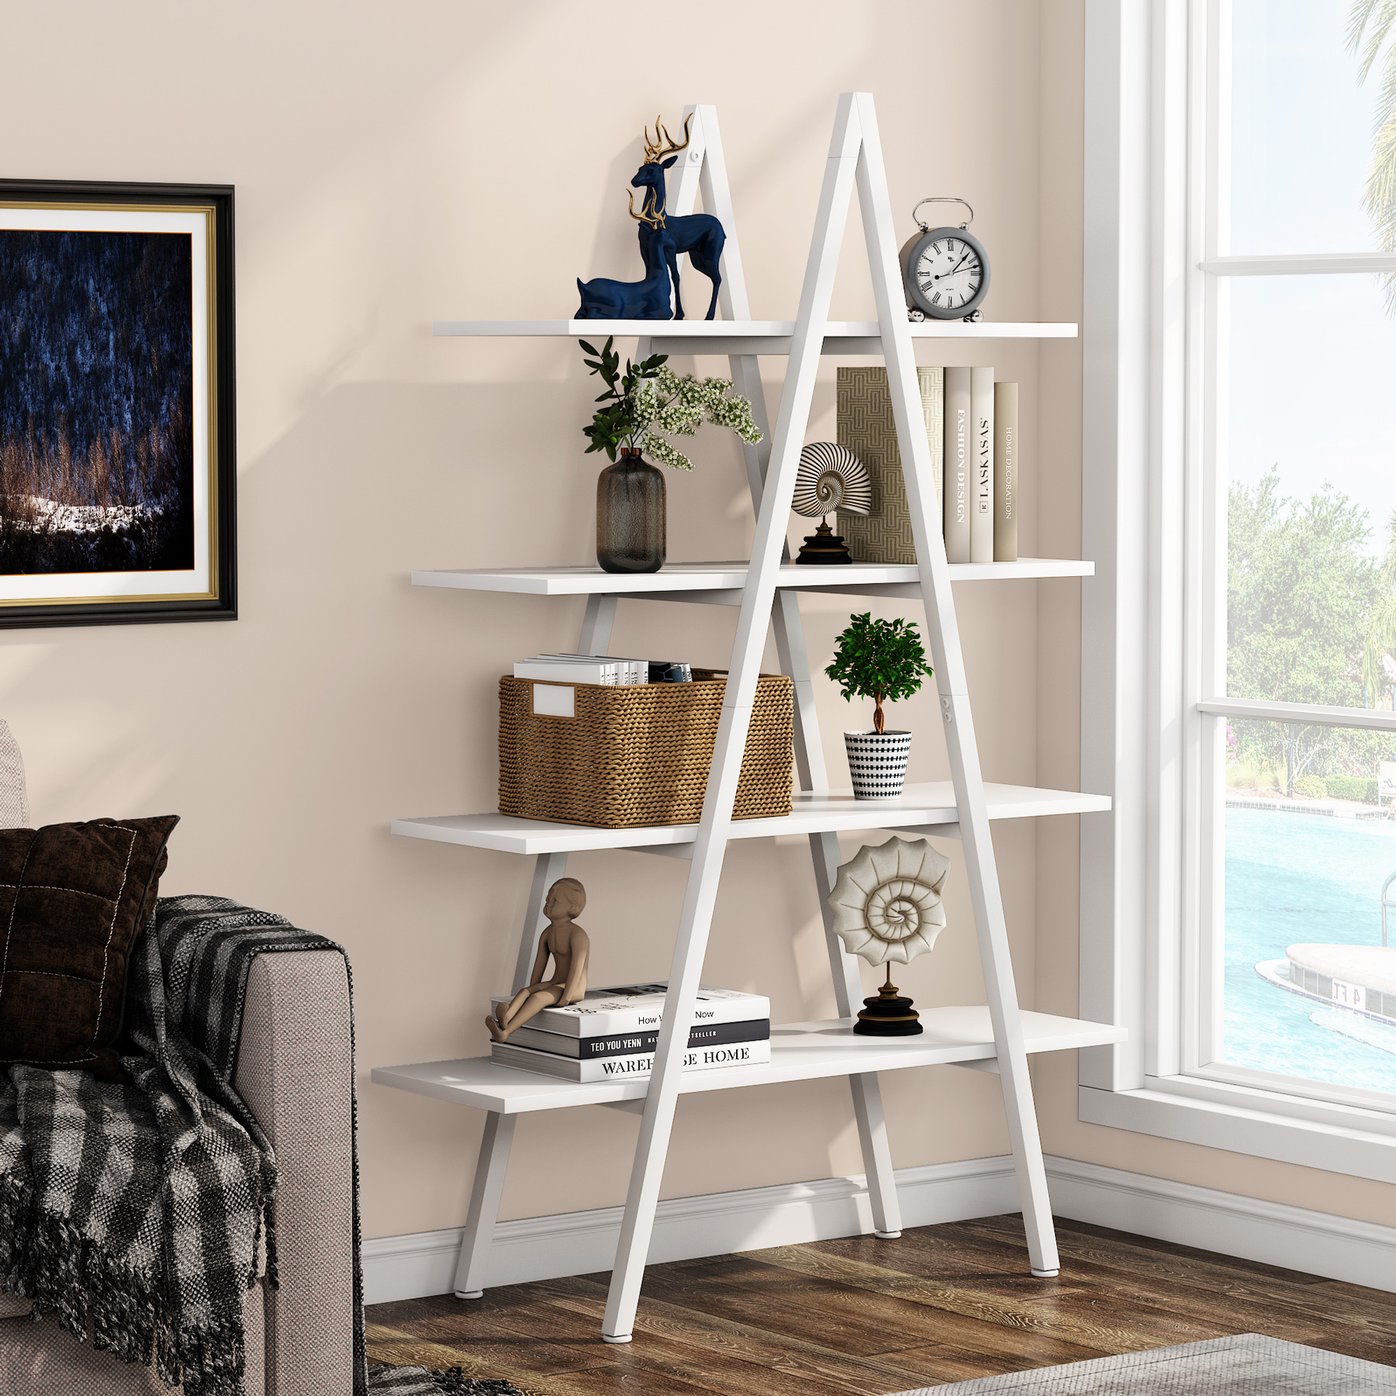 4-Tier Bookshelf, A-Shaped Bookcase 4 Shelves Industrial Ladder Shelfnd Collection